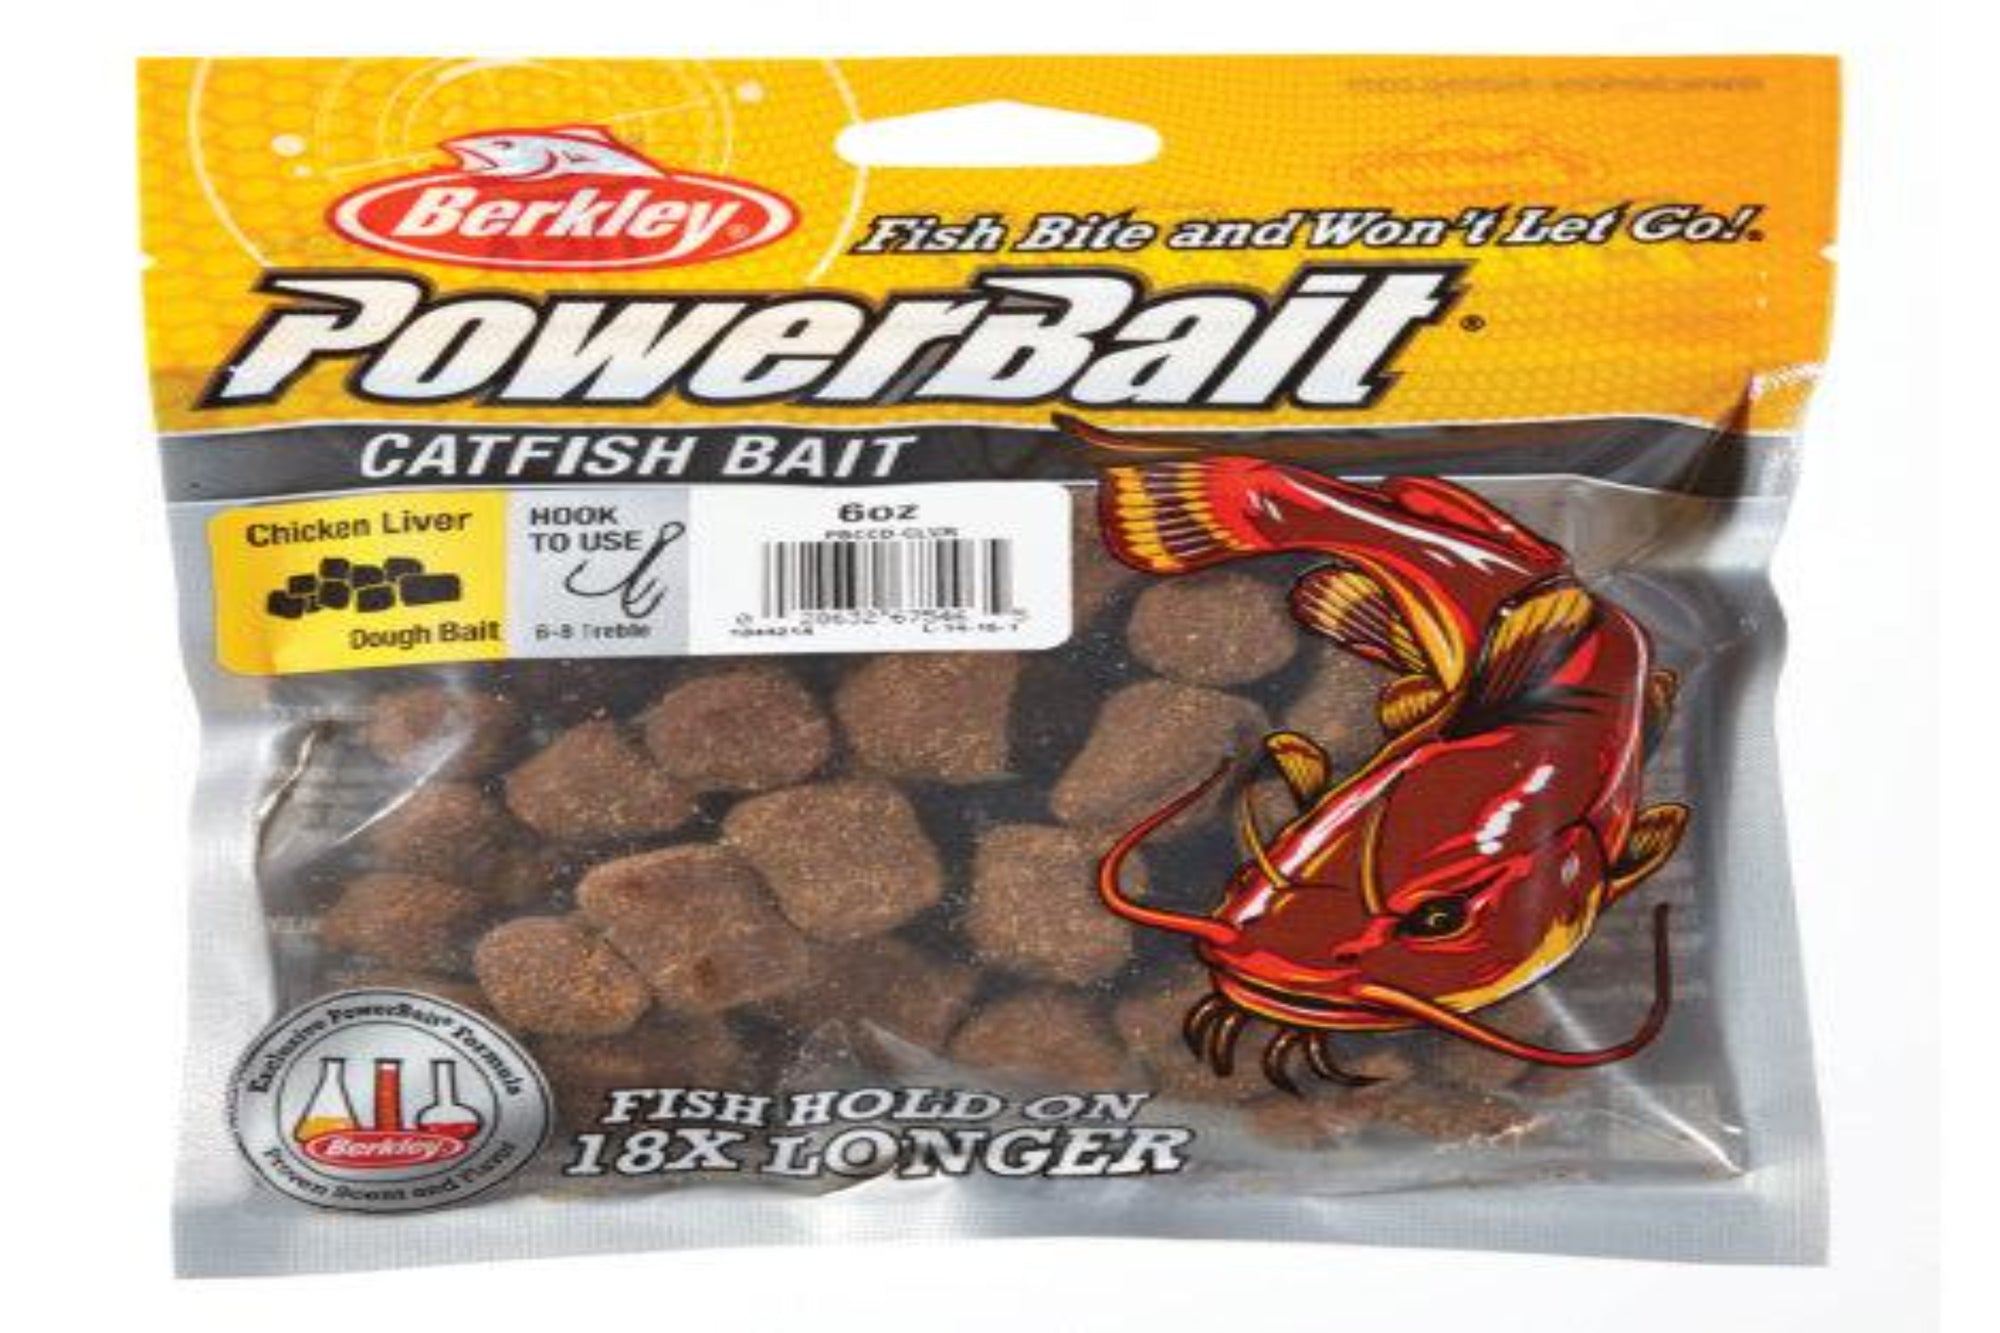 Berkley powerbait Catfish Bait